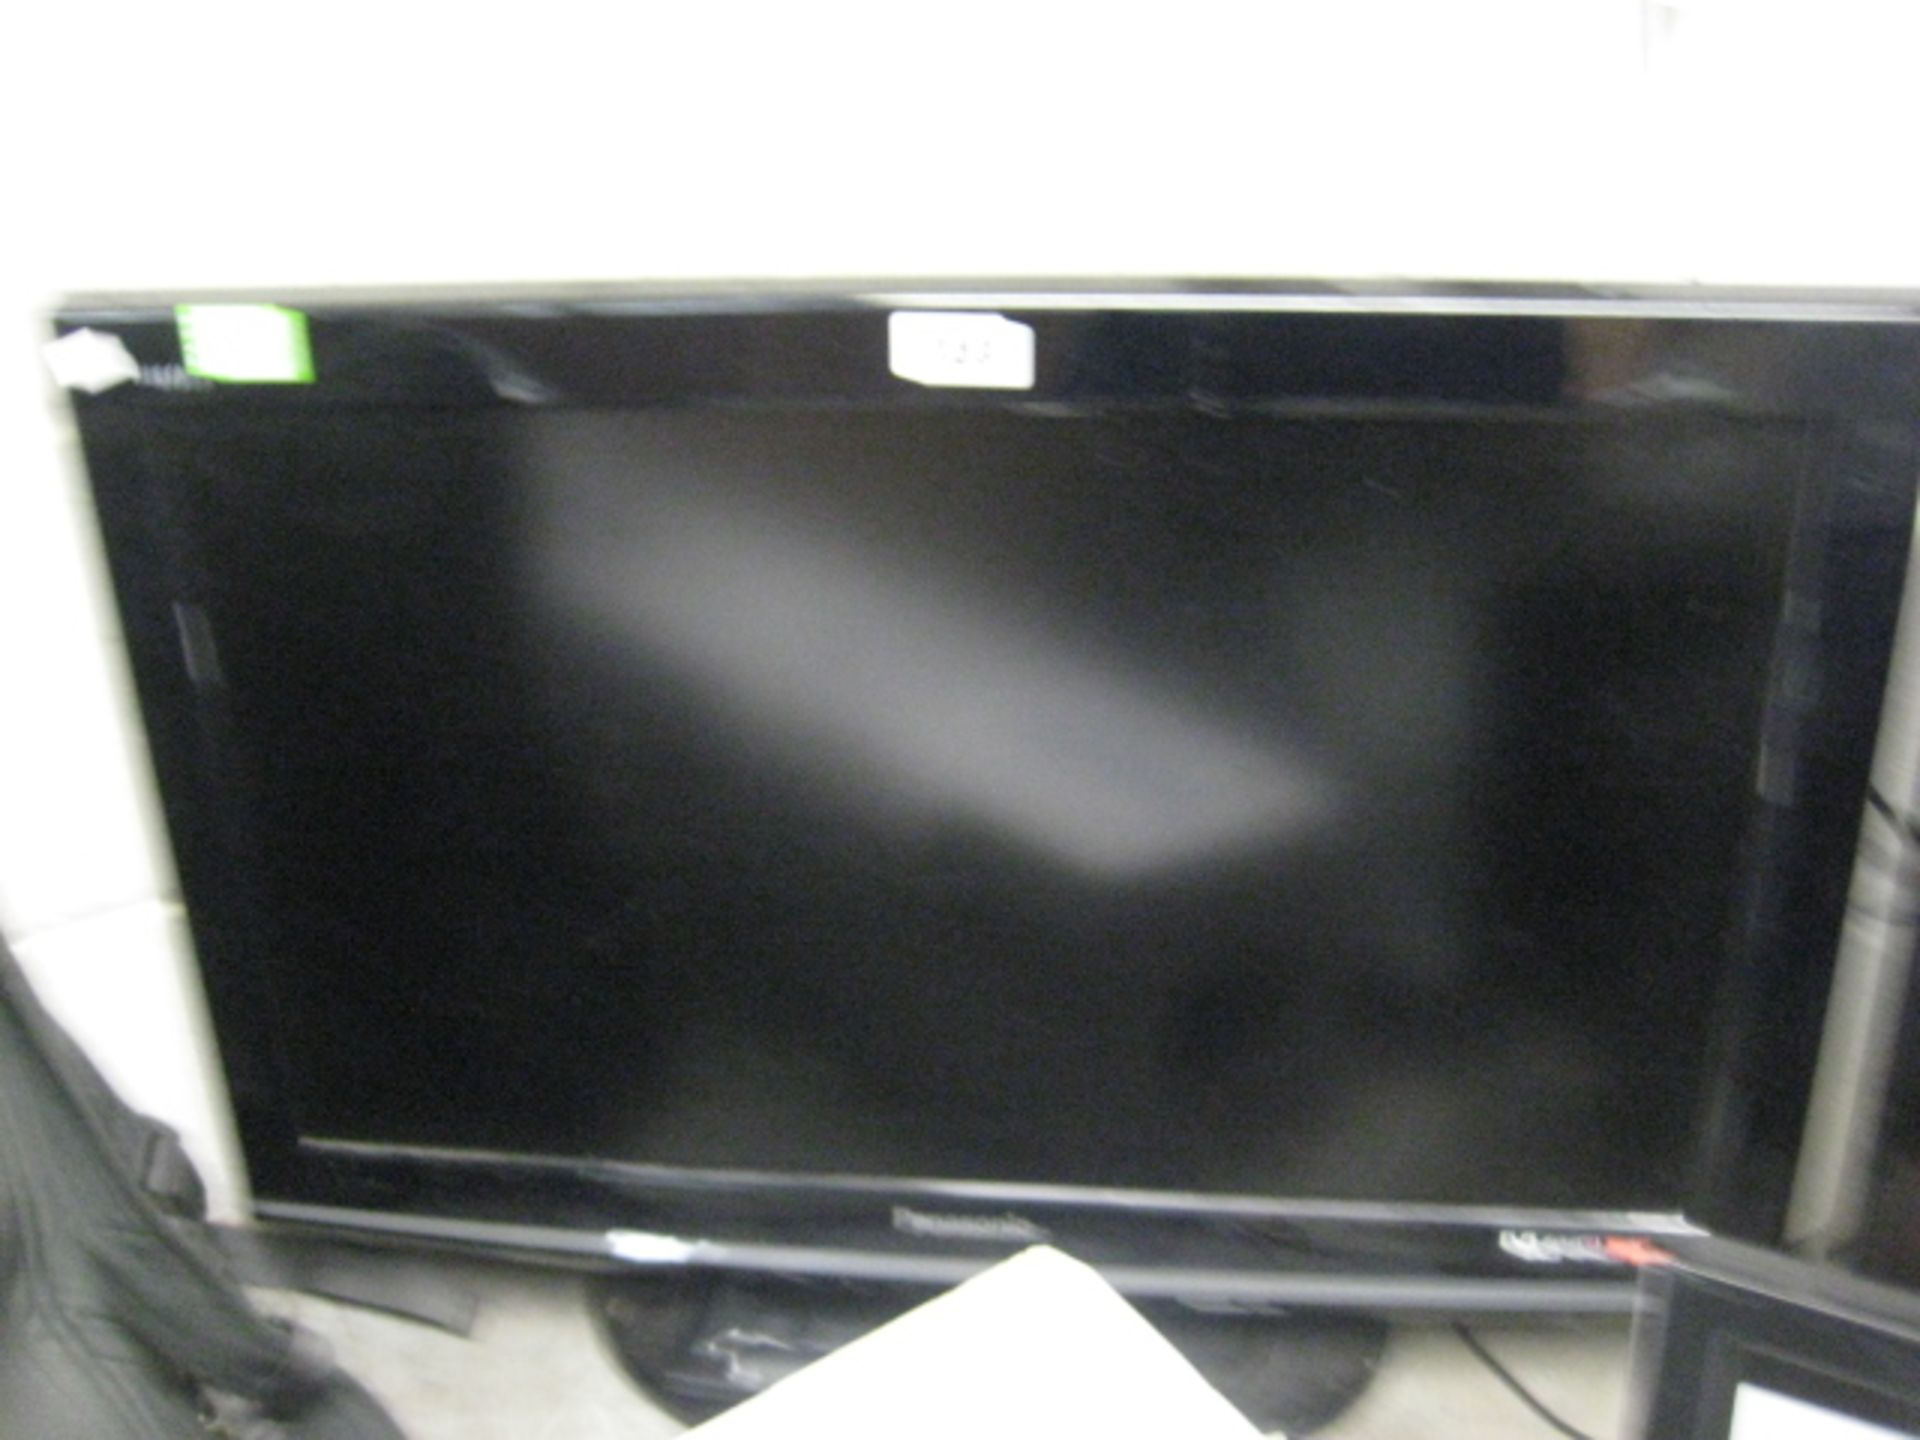 (18) Panasonic Viera flat screen TV